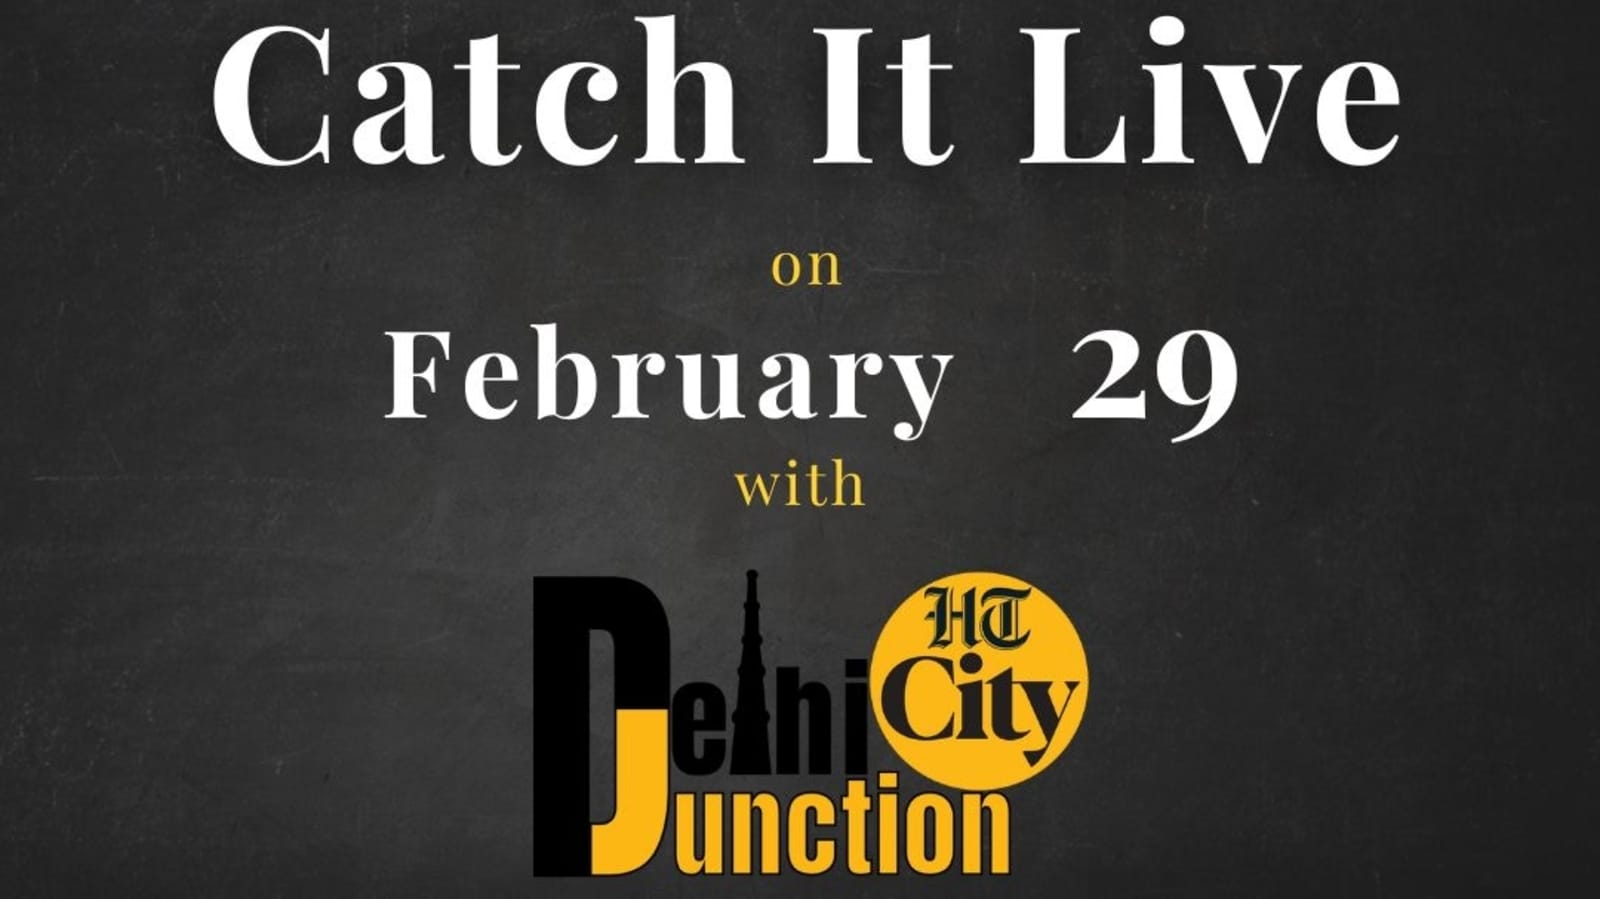 HT City Delhi Junction: Catch It Live on February 29